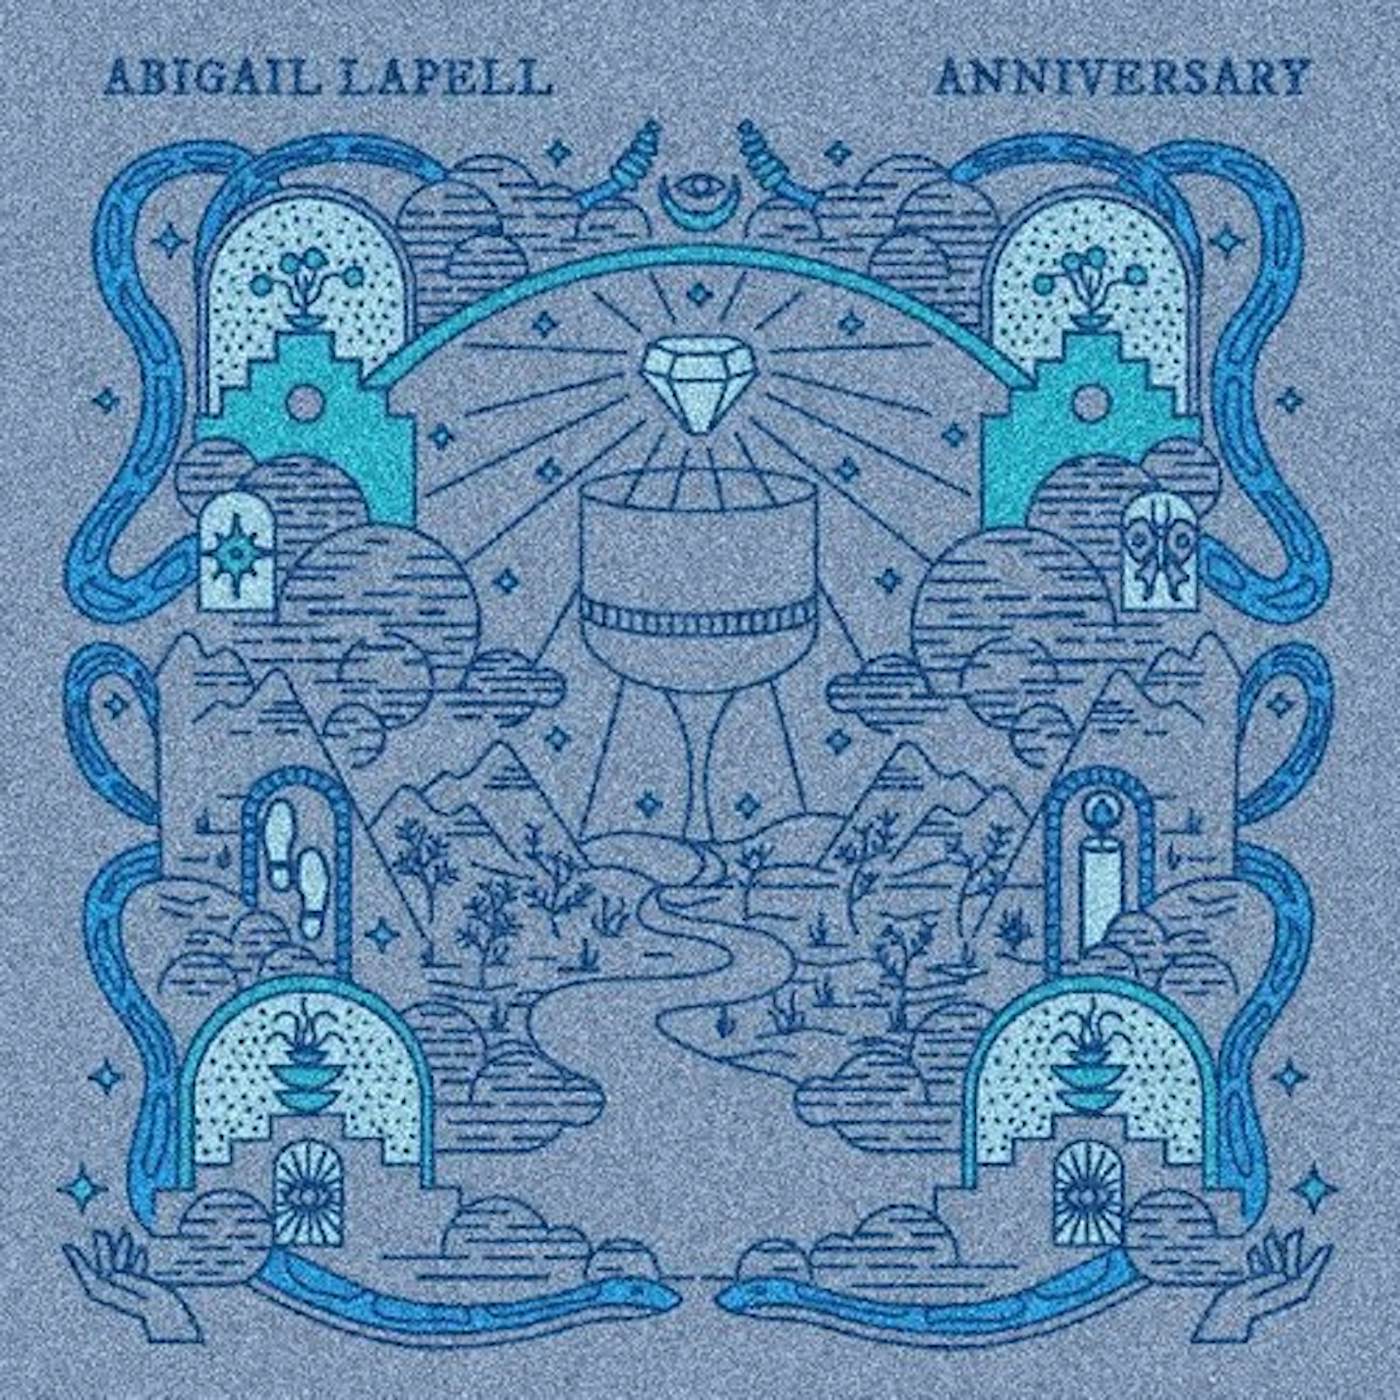 Abigail Lapell ANNIVERSARY Vinyl Record